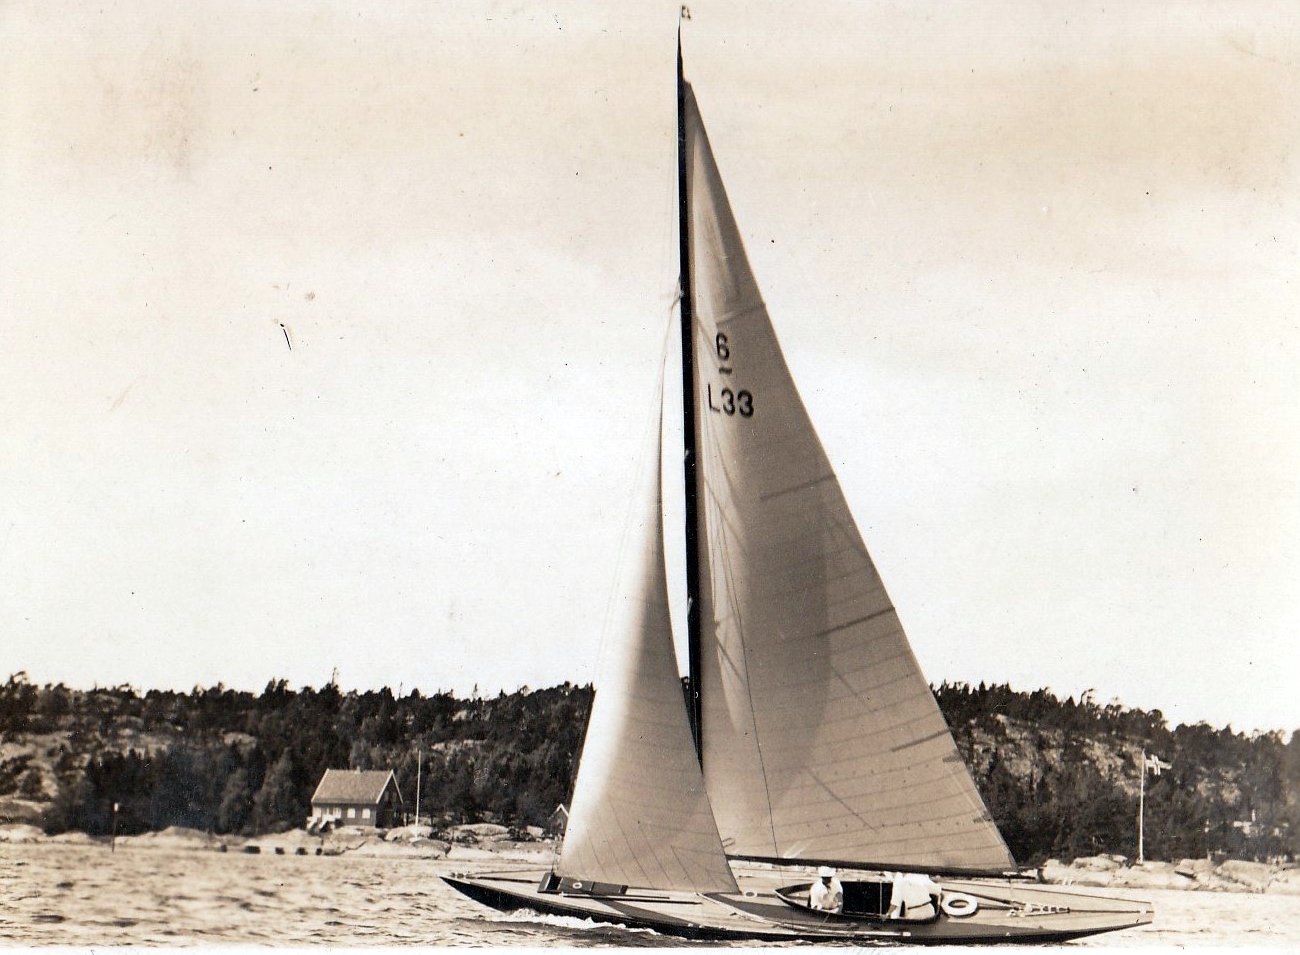 Six Metre sailing boat. L33 on the sail.